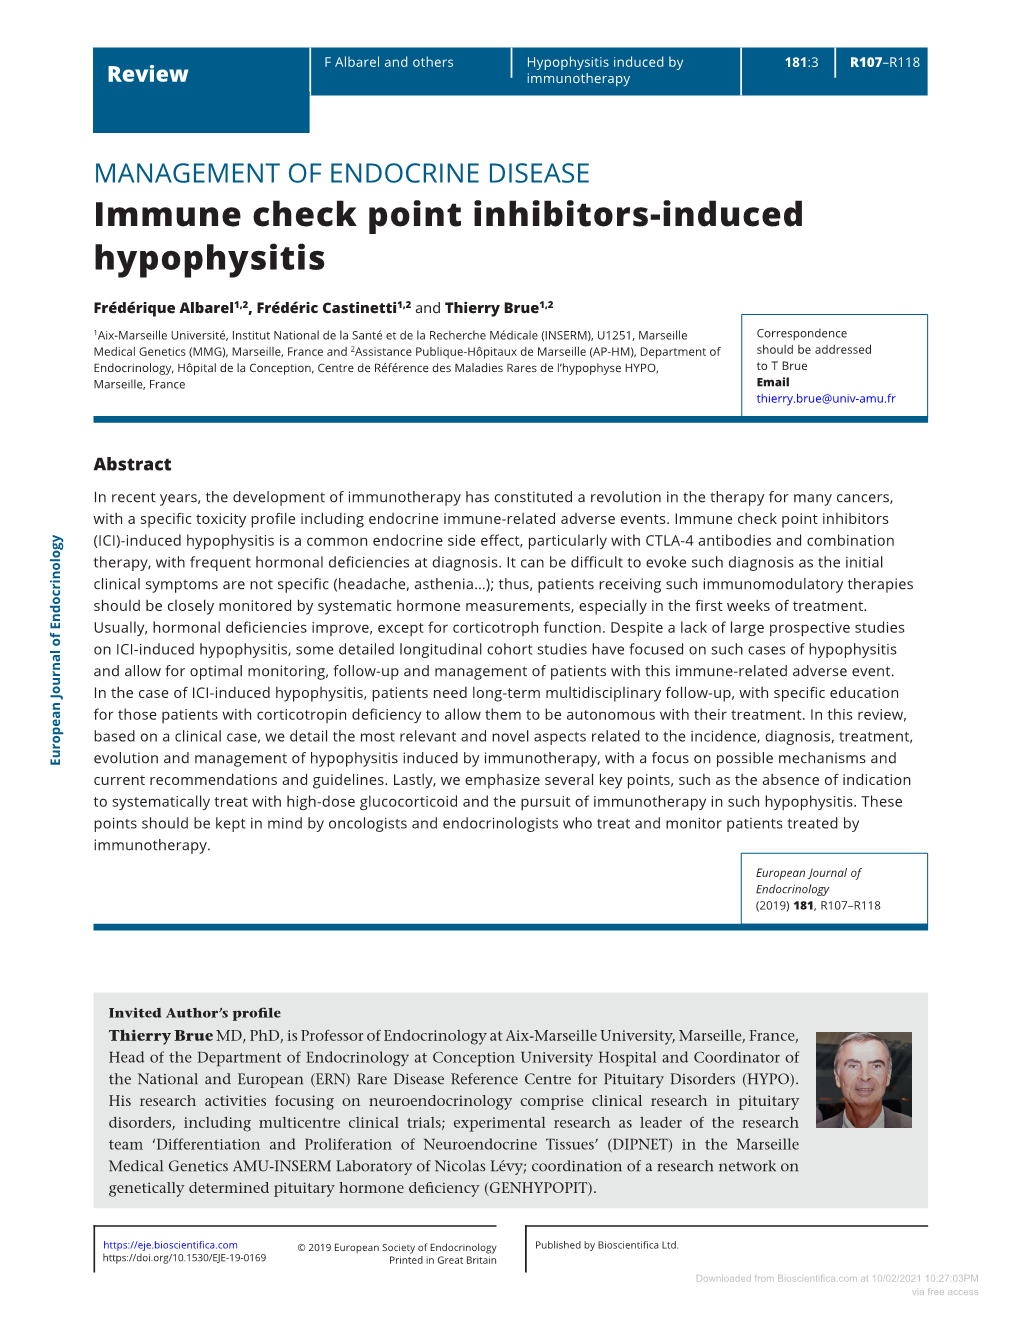 Immune Check Point Inhibitors-Induced Hypophysitis